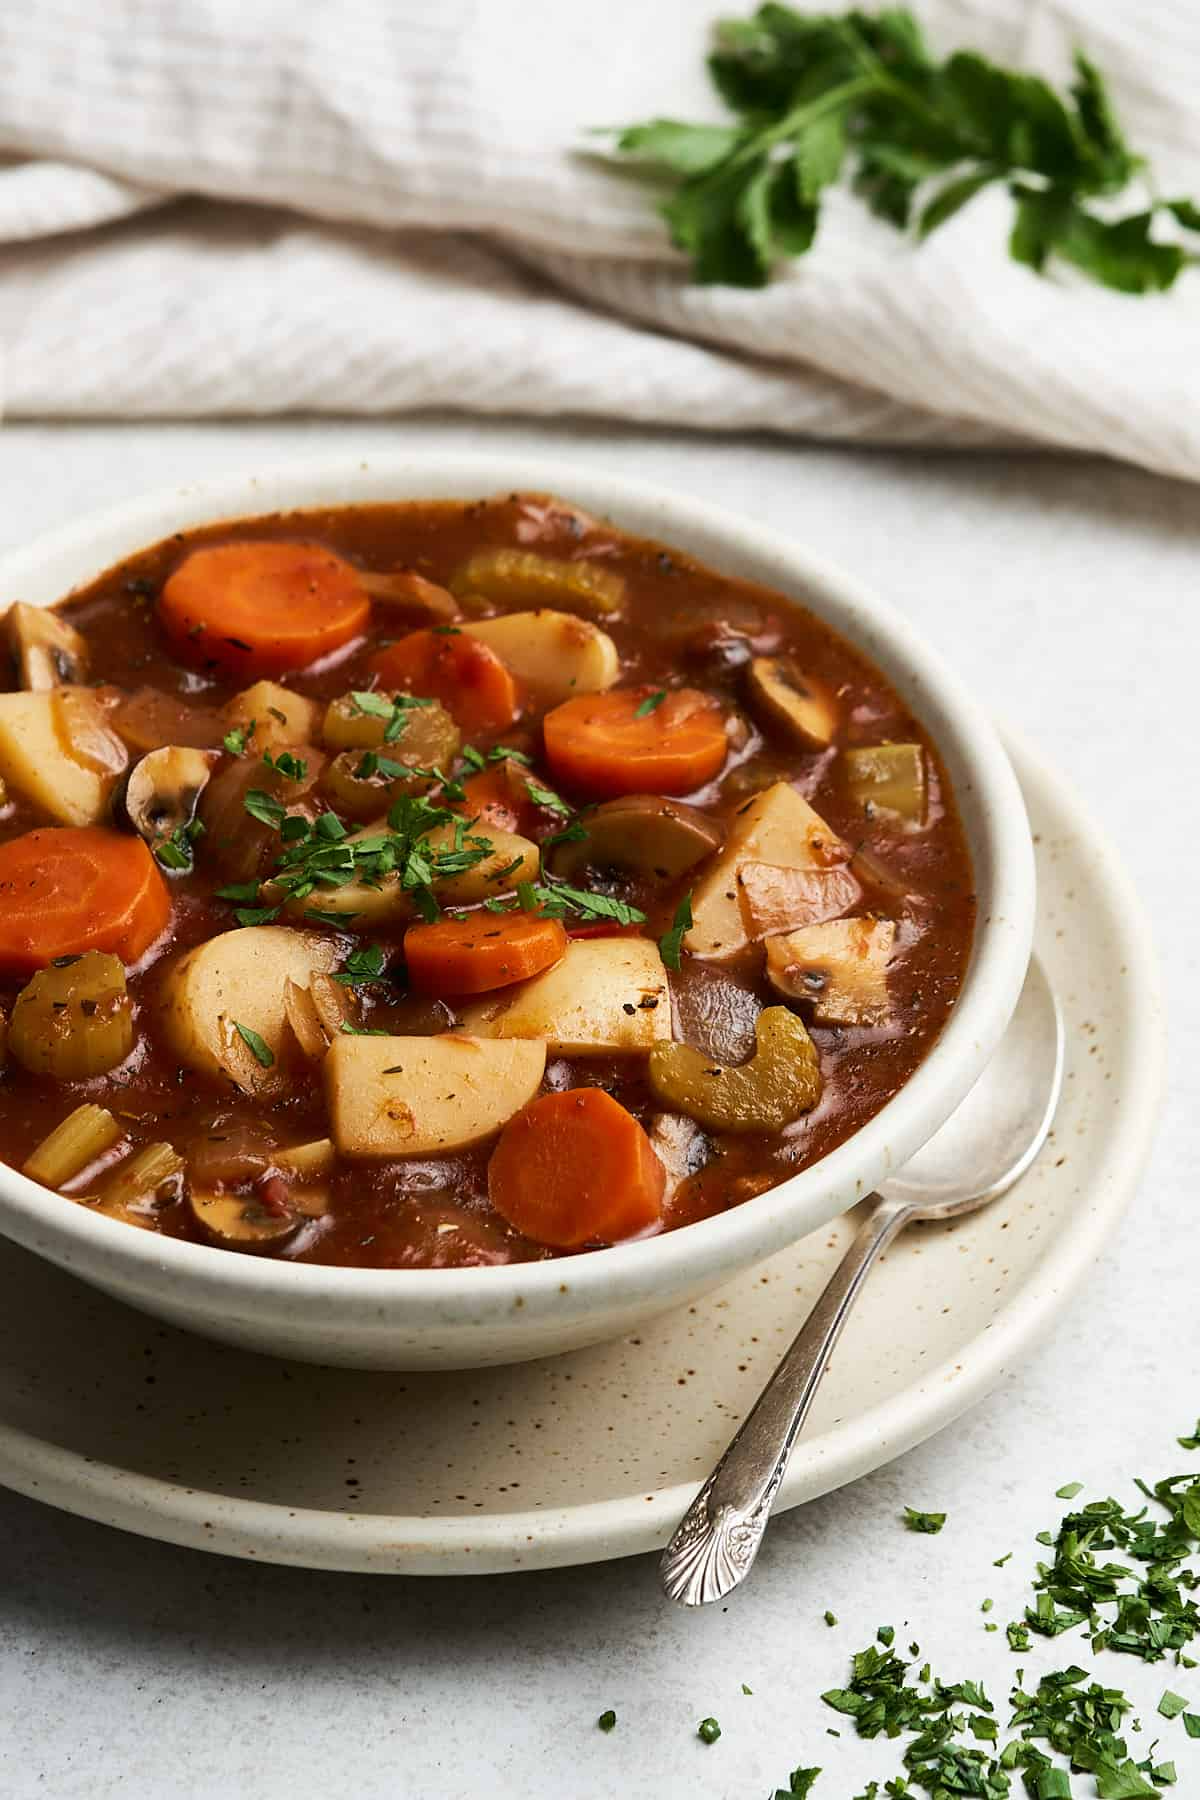 comforting (vegan) stew & casserole recipes